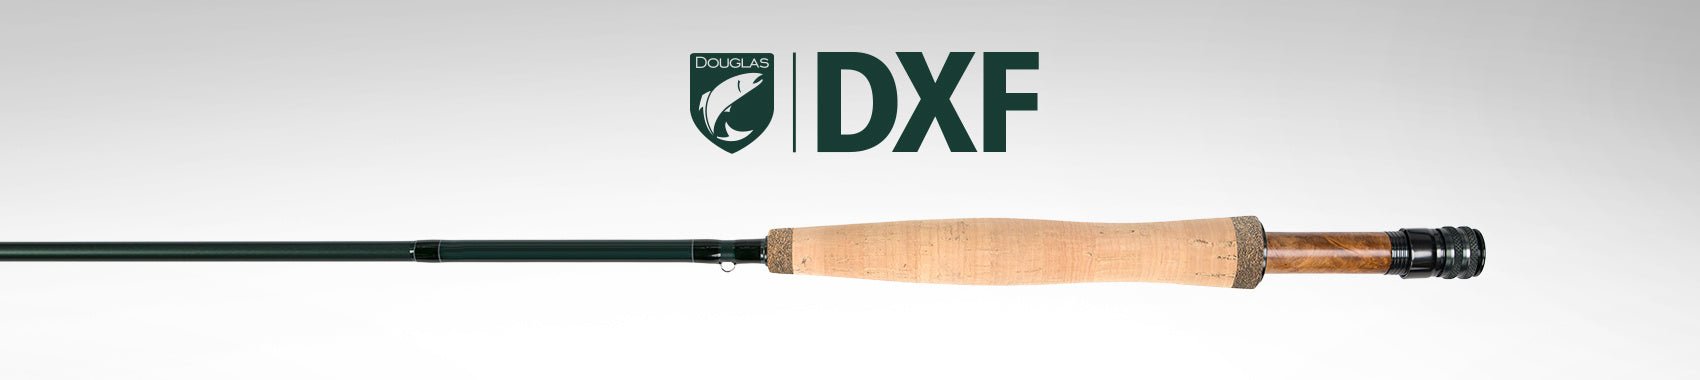 Douglas - DXF - 690-4